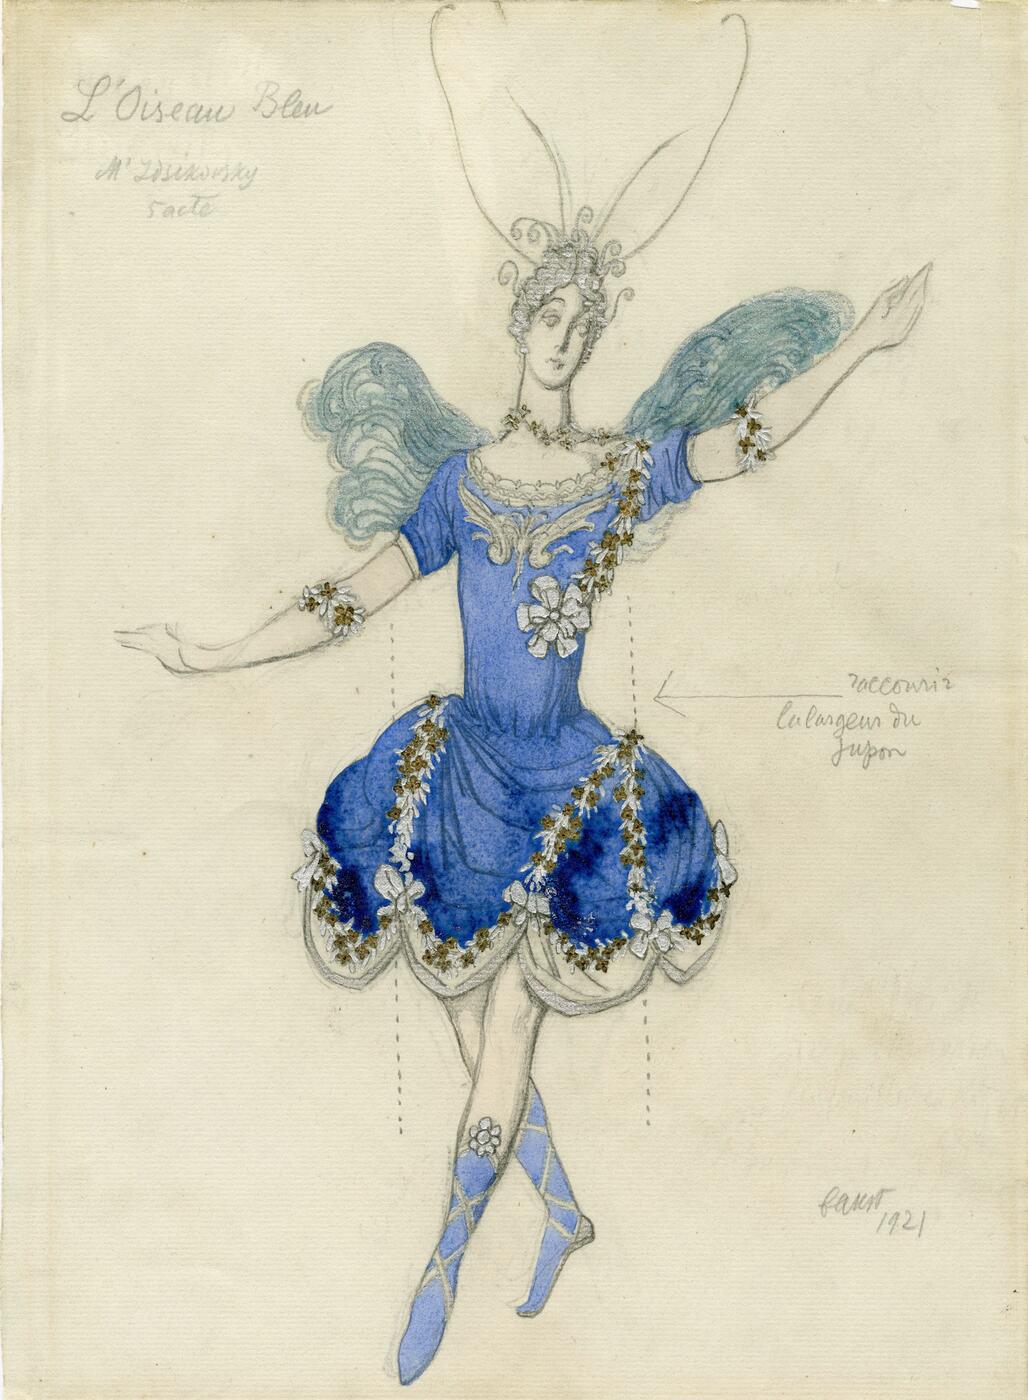 Bluebird, Costume Design for the Ballet “The Sleeping Princess”